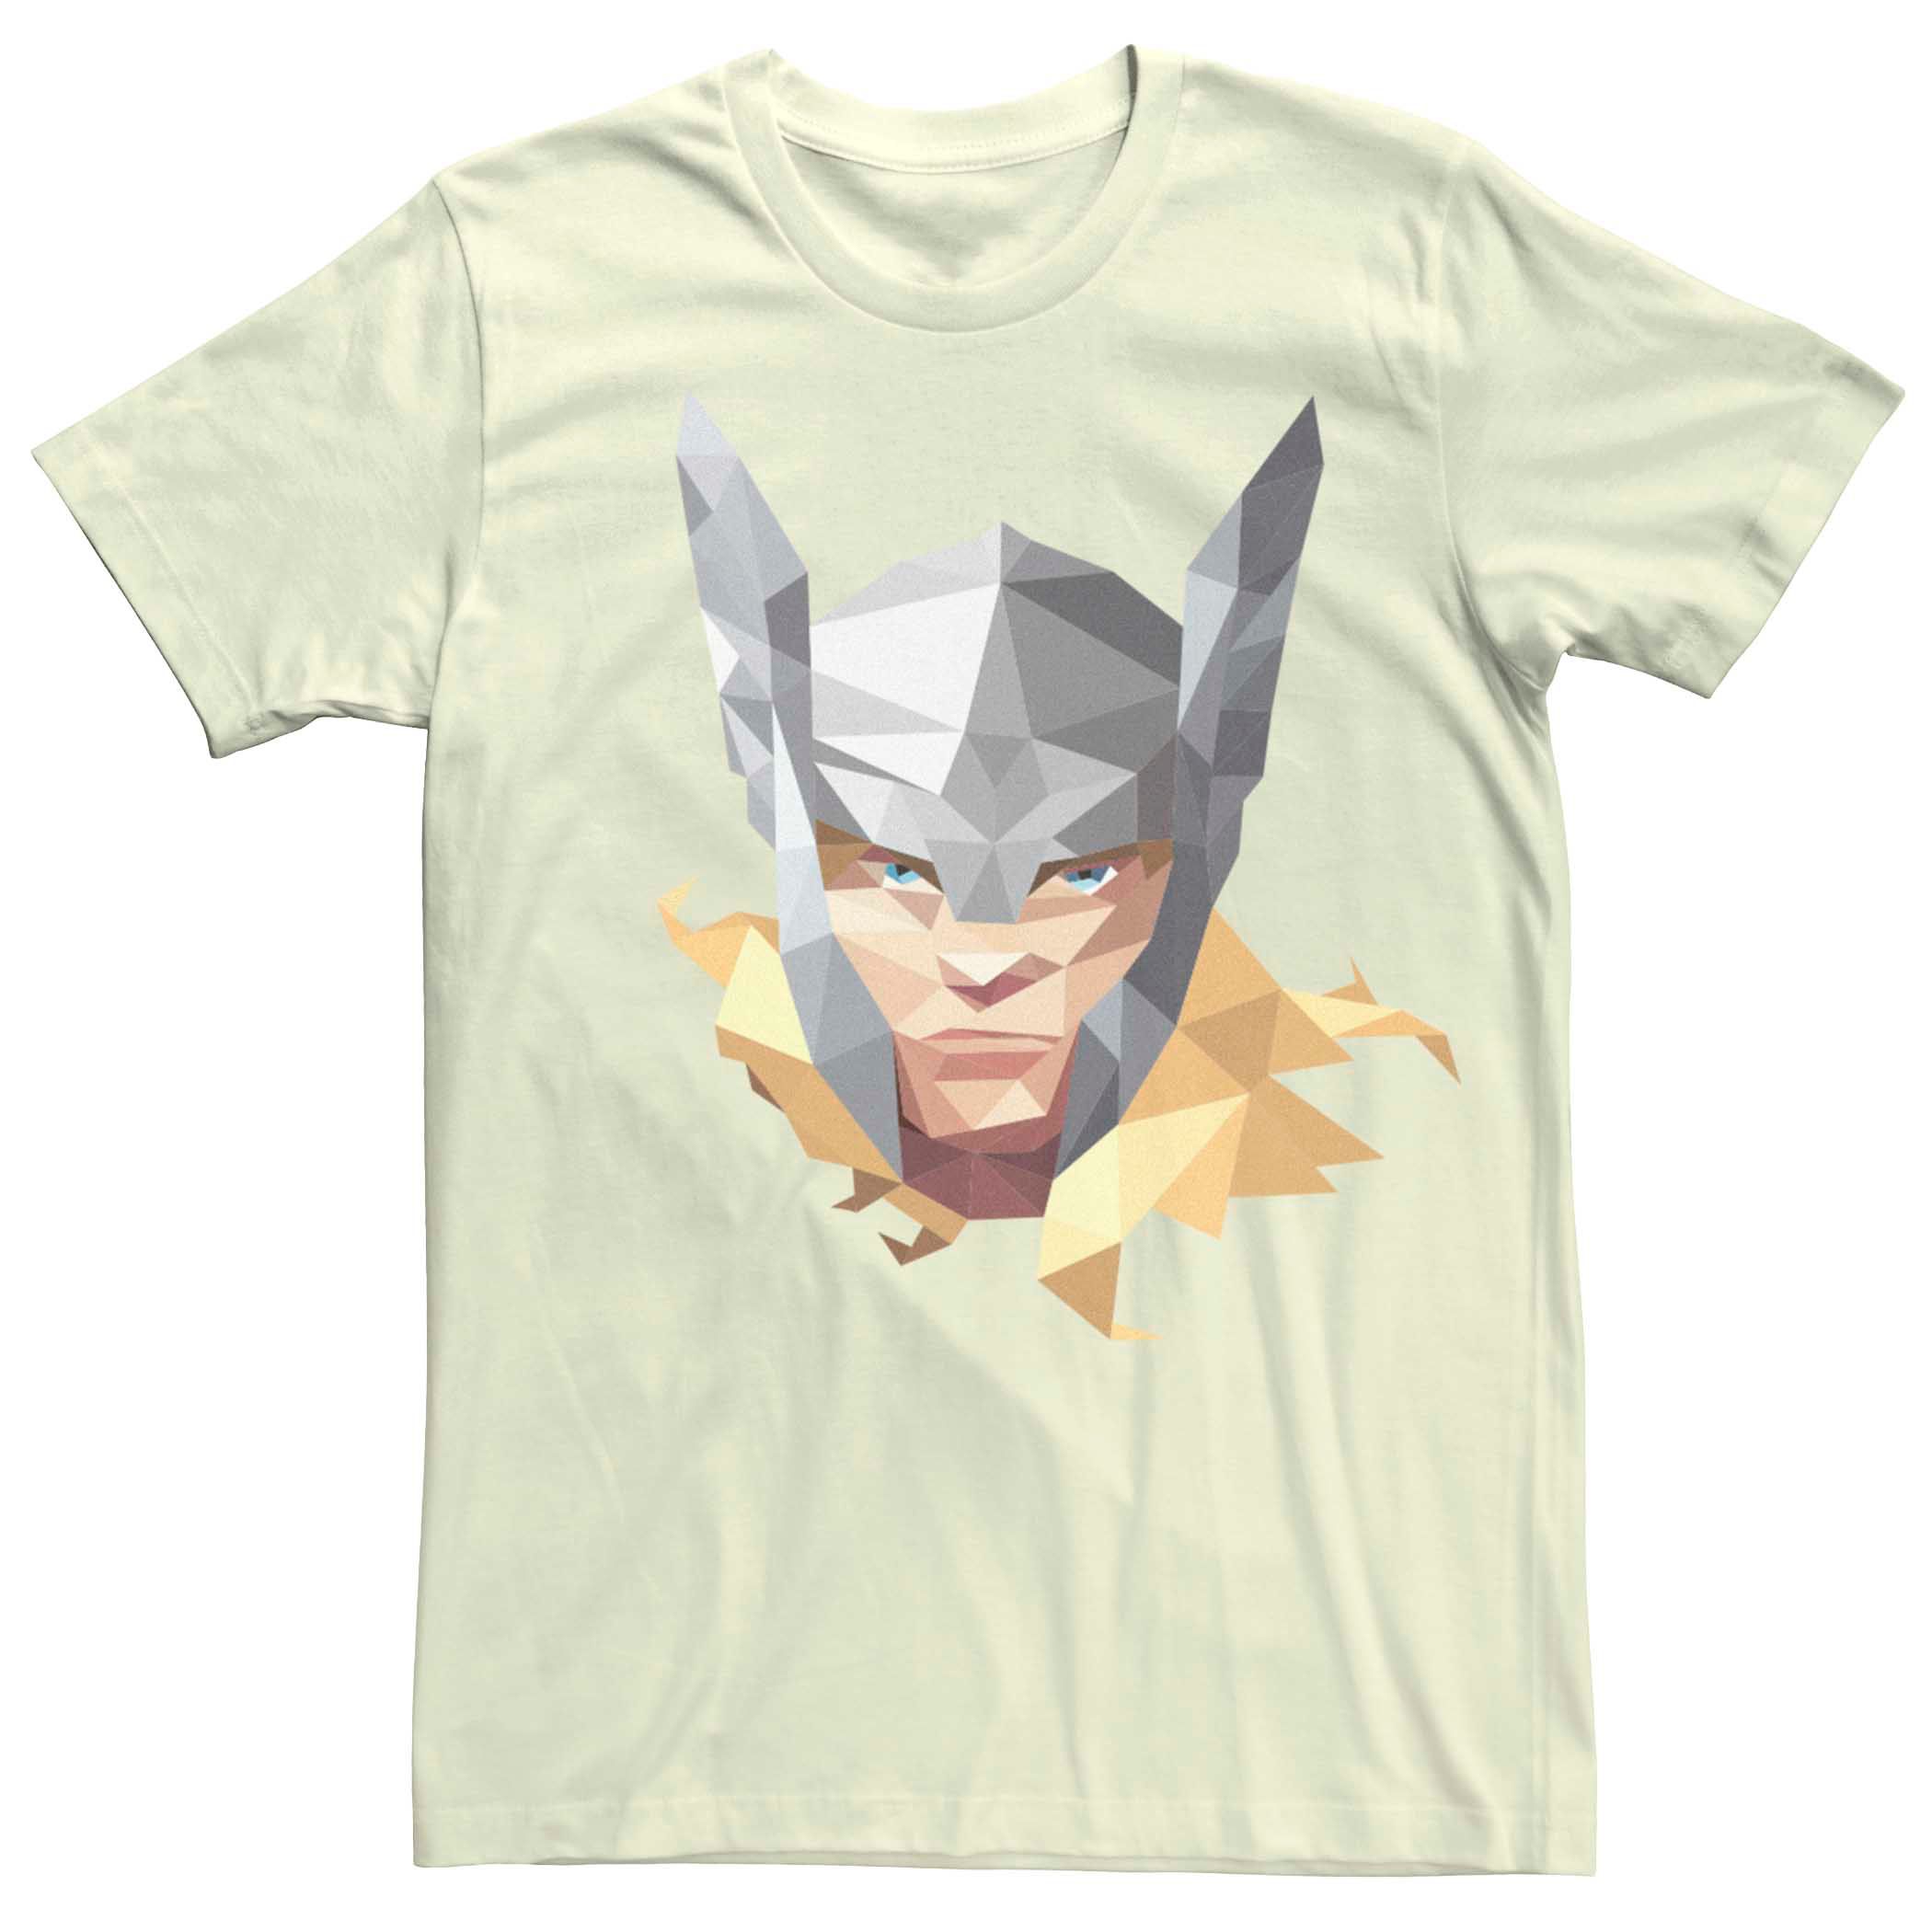 Мужская футболка с геометрическим рисунком Marvel Thor Licensed Character